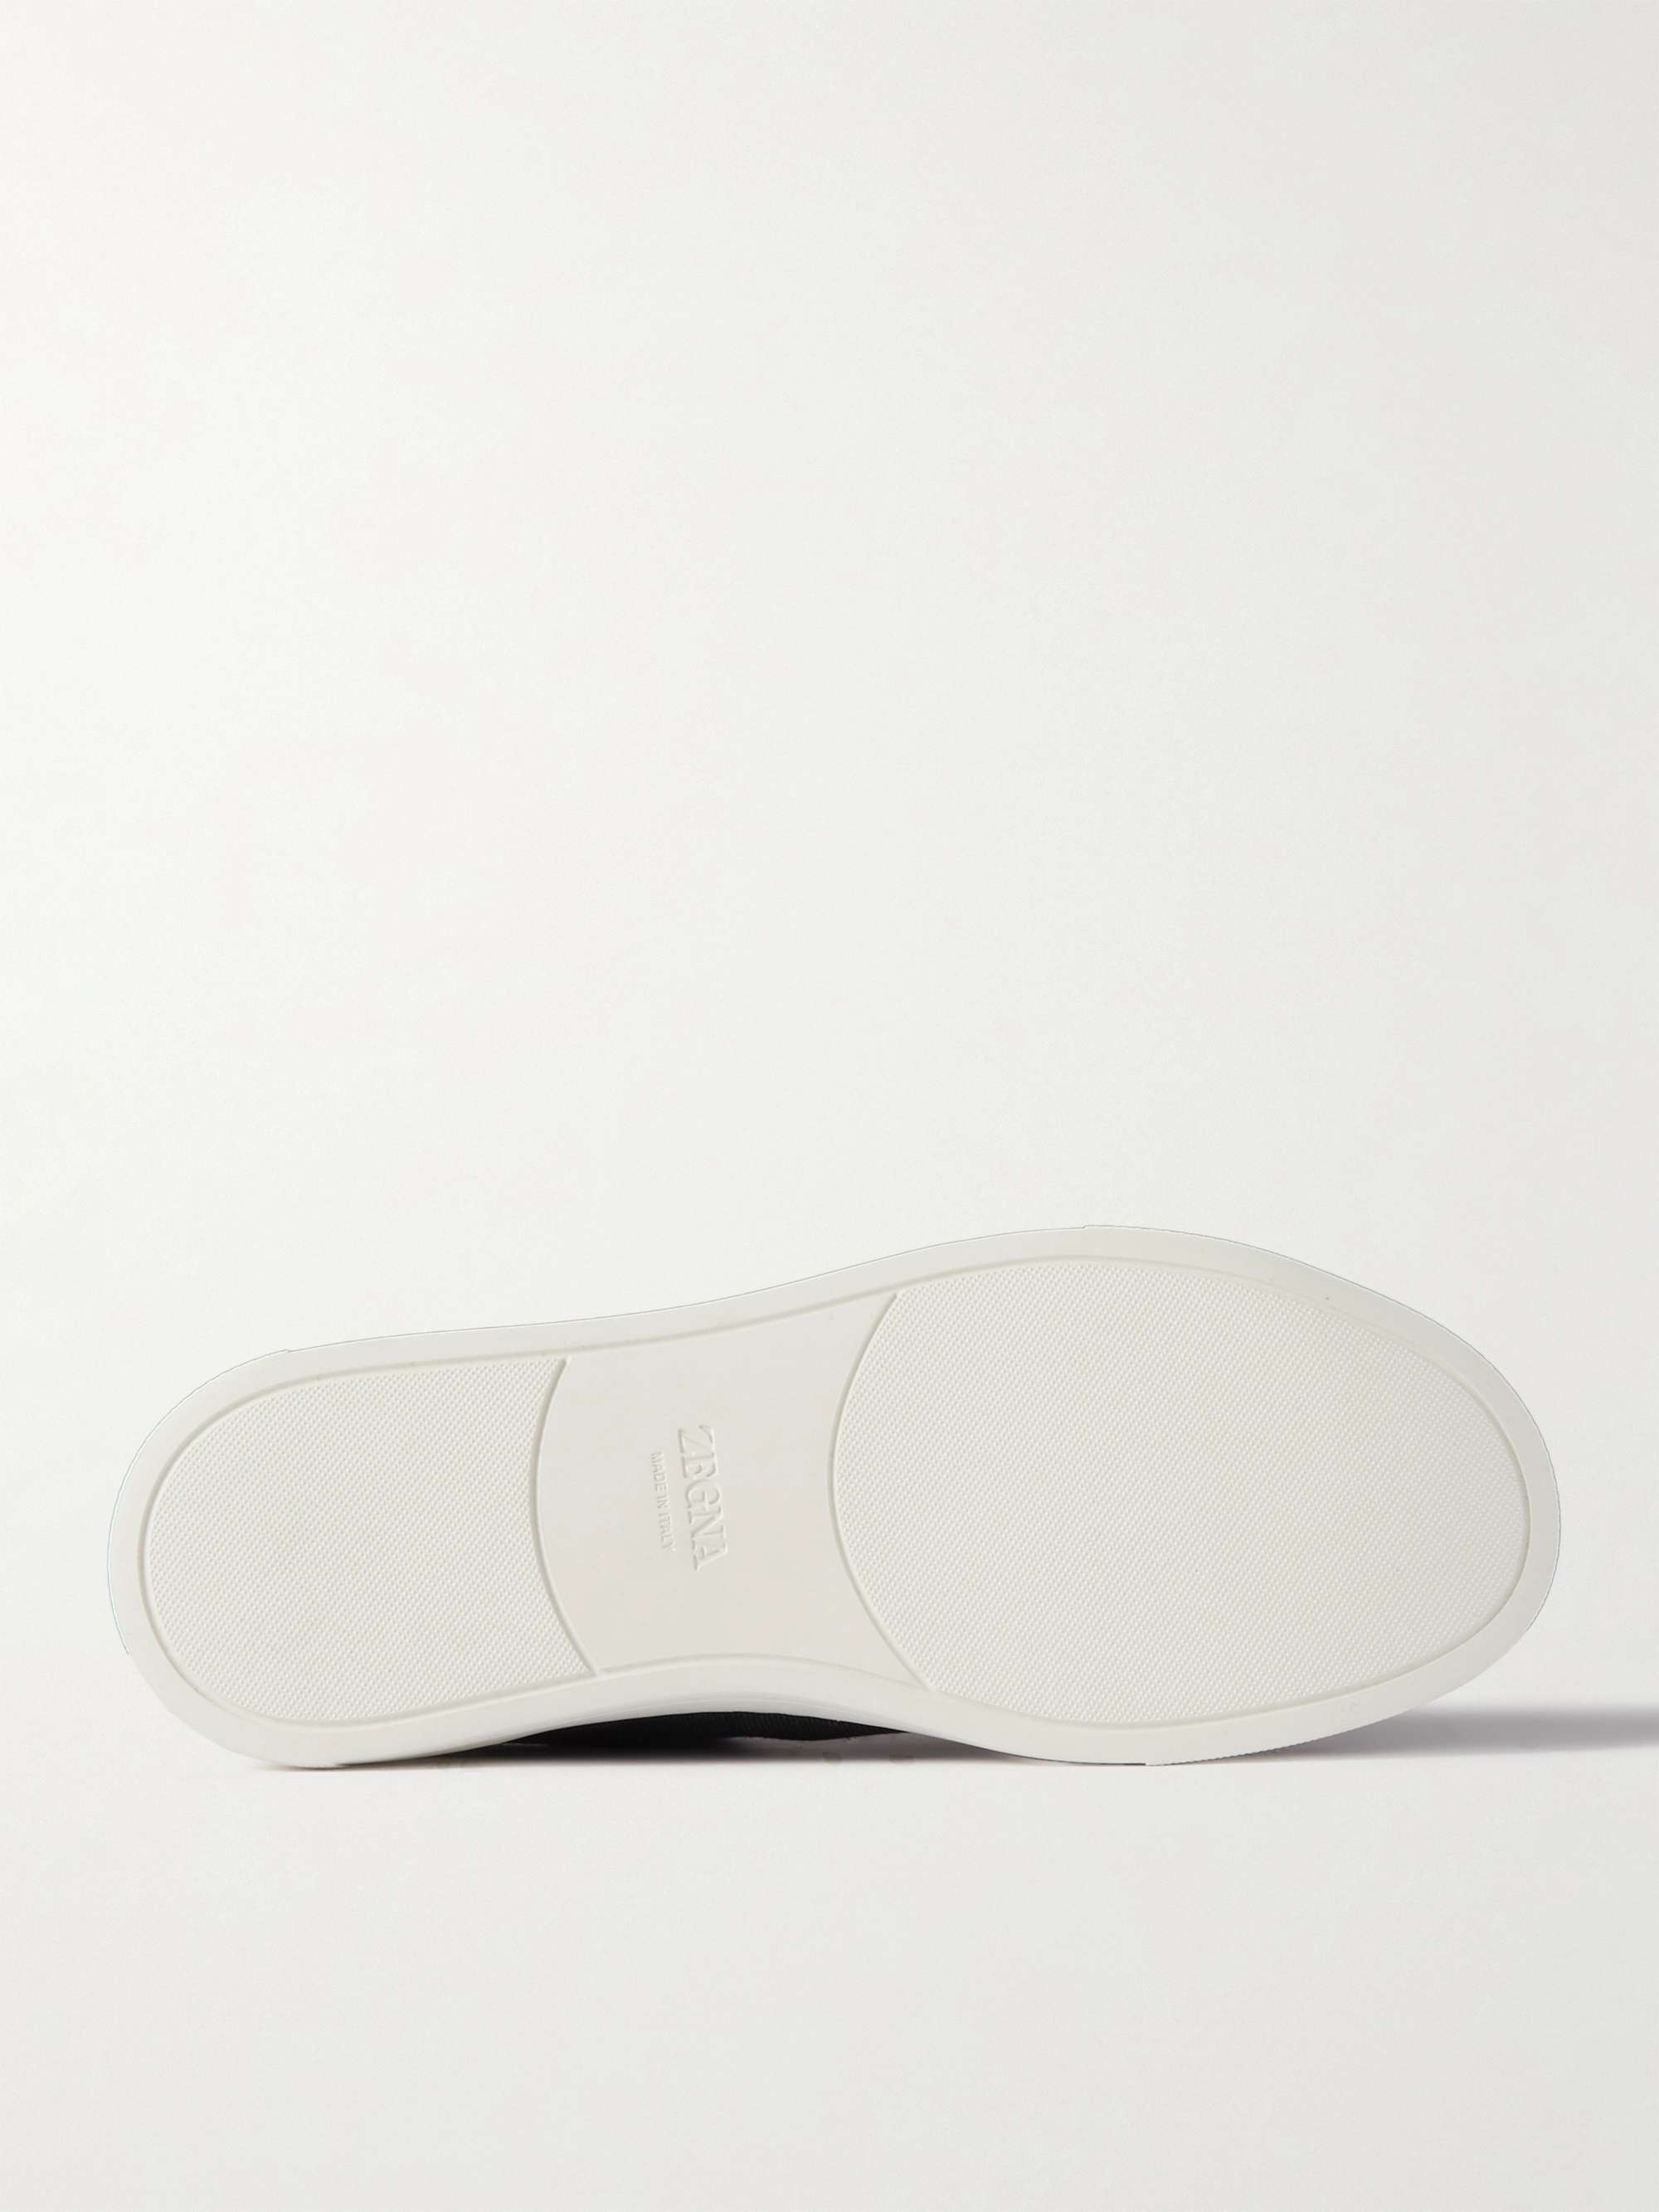 ZEGNA Leather-Trimmed Canvas Slip-On Sneakers for Men | MR PORTER